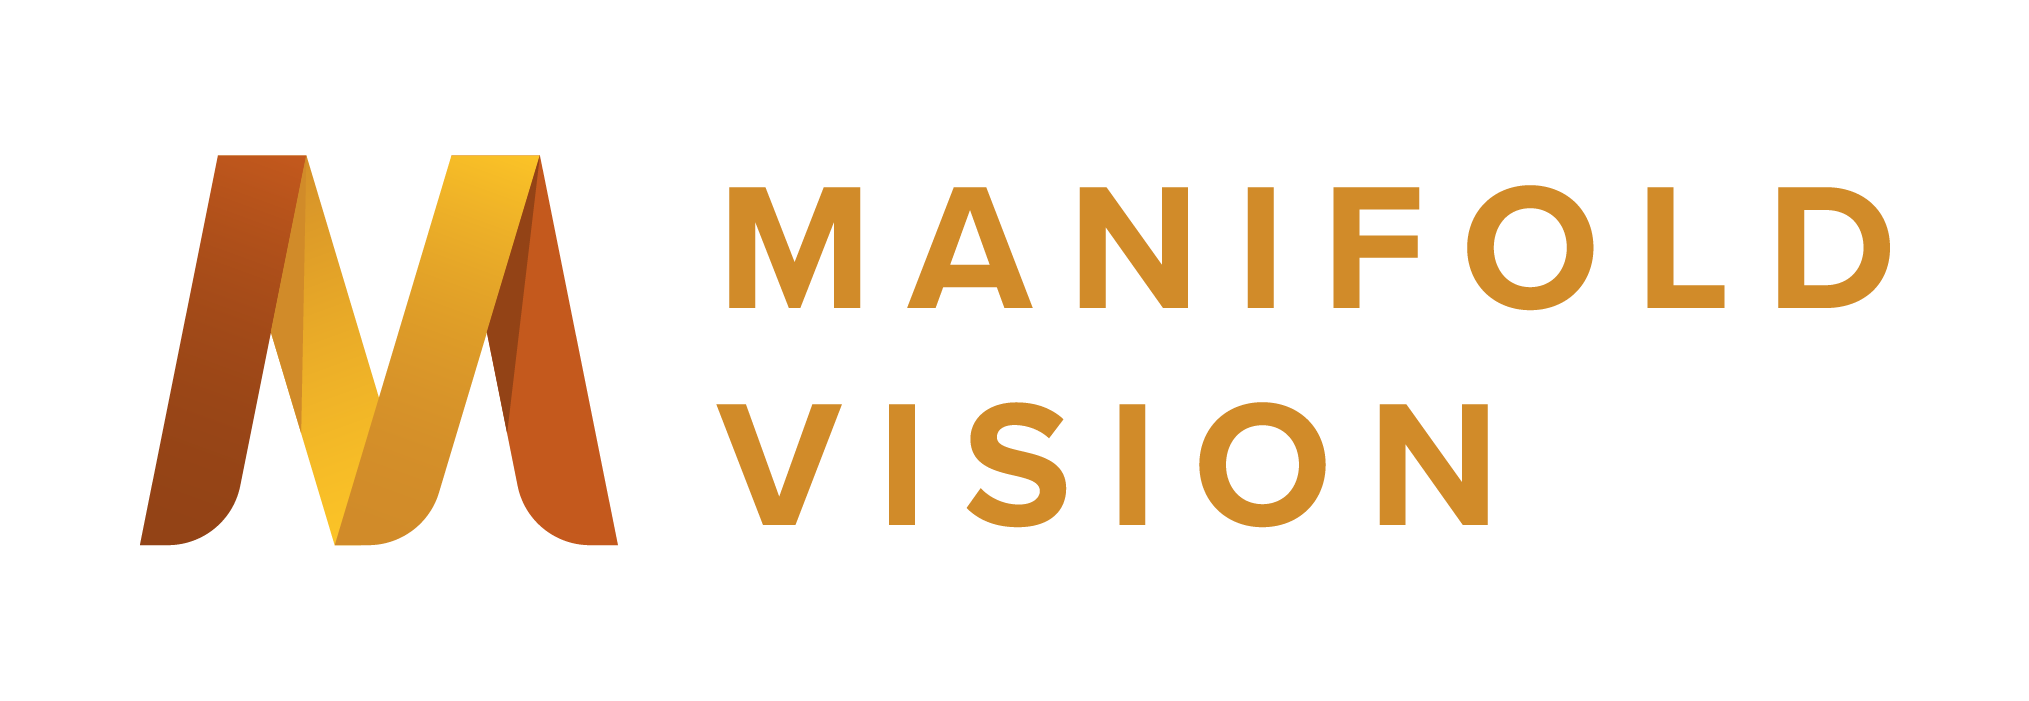 Manifold Vision